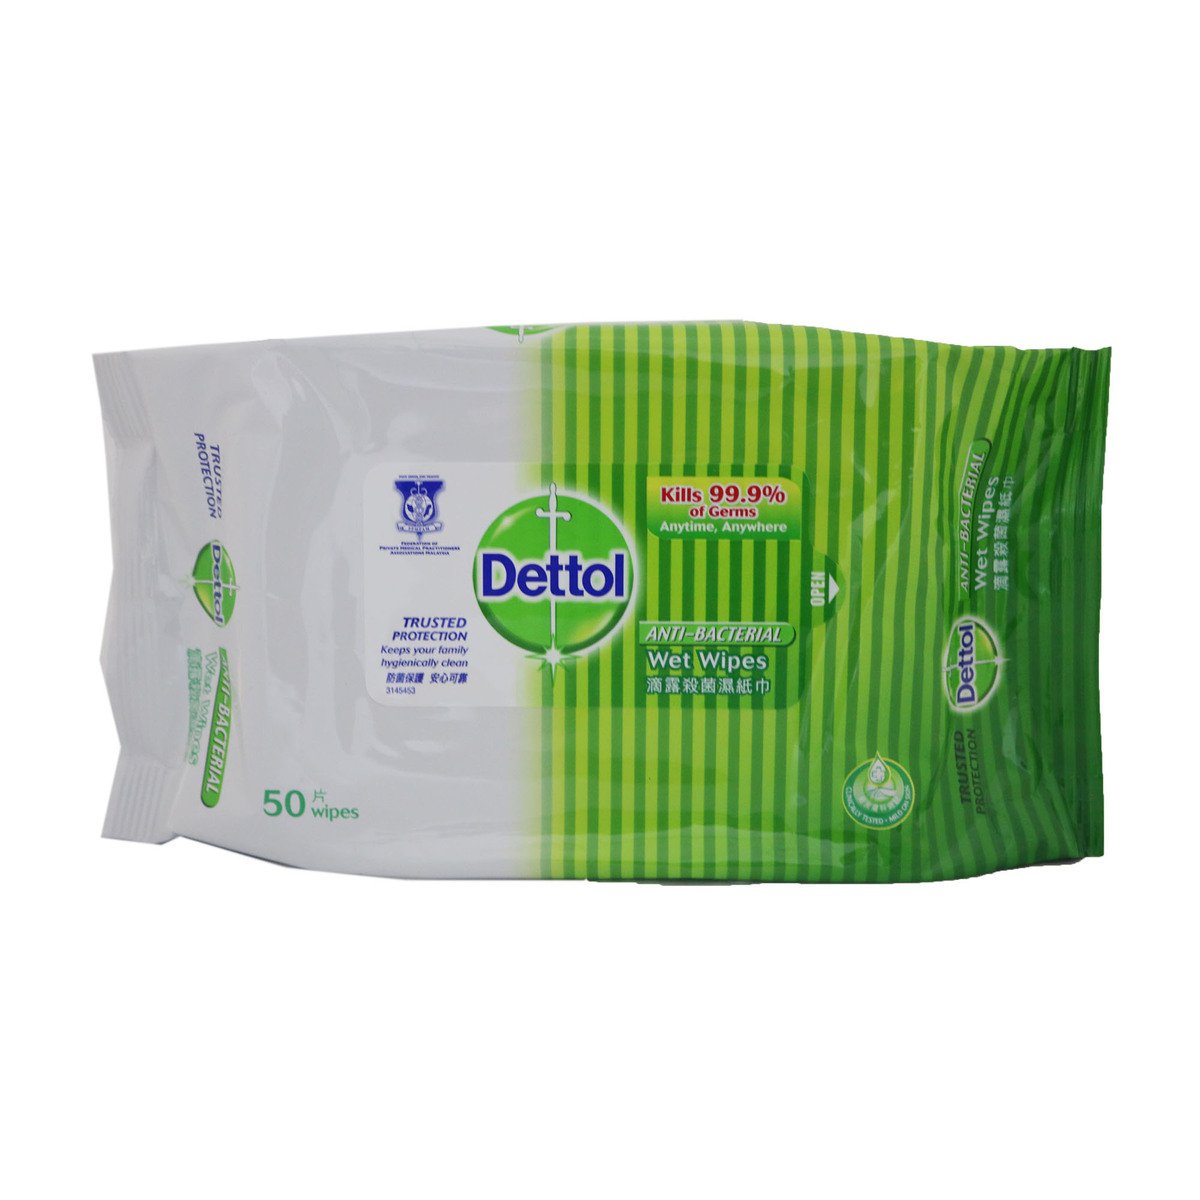 Dettol Antibacterial Wet Wipes 50sheets